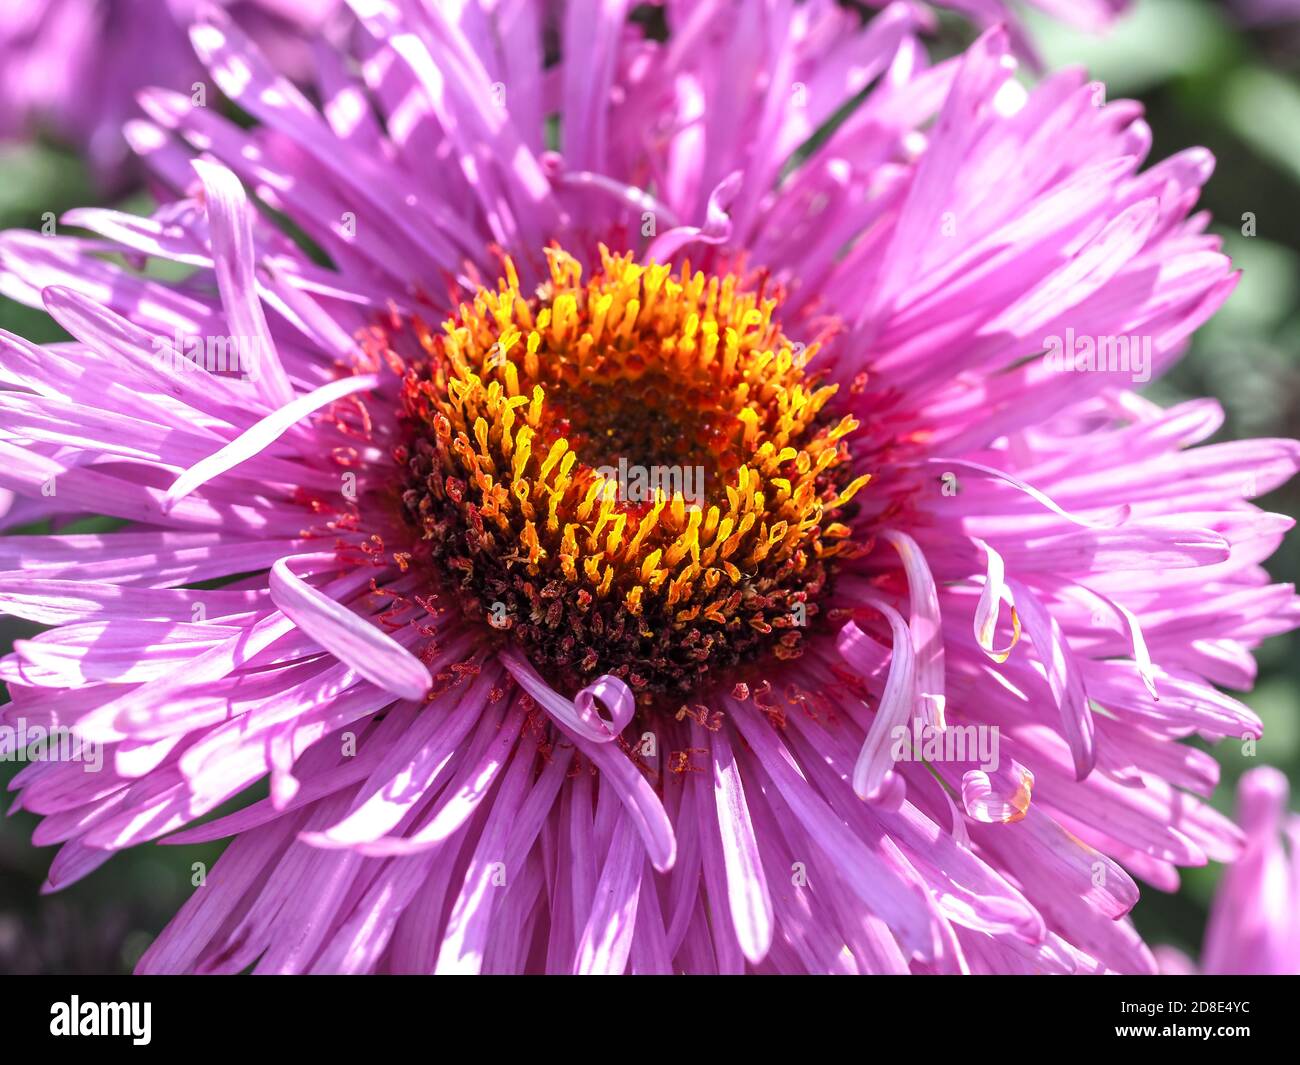 Closeup of a bright purple aster flower in a garden, Aster novi-belgii Peter Pan Stock Photo